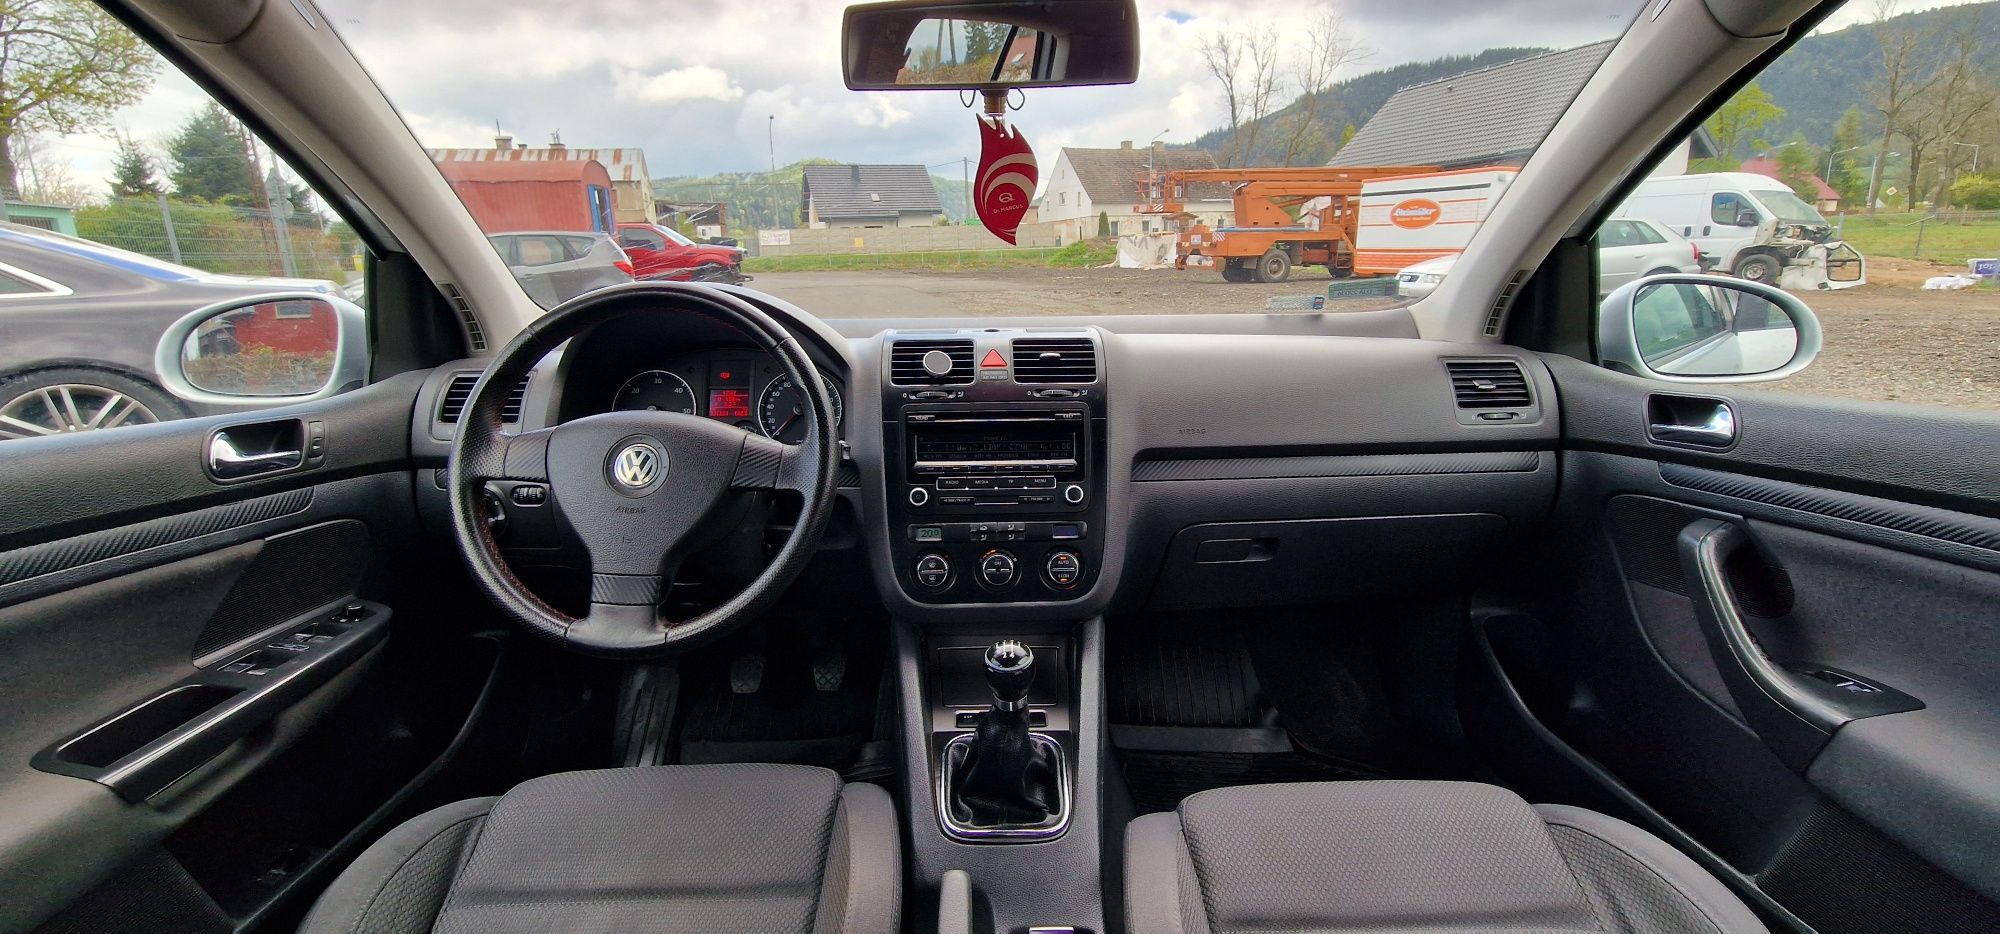 VW Golf V 1.9tdi, 5 drzwi, klima, manual!